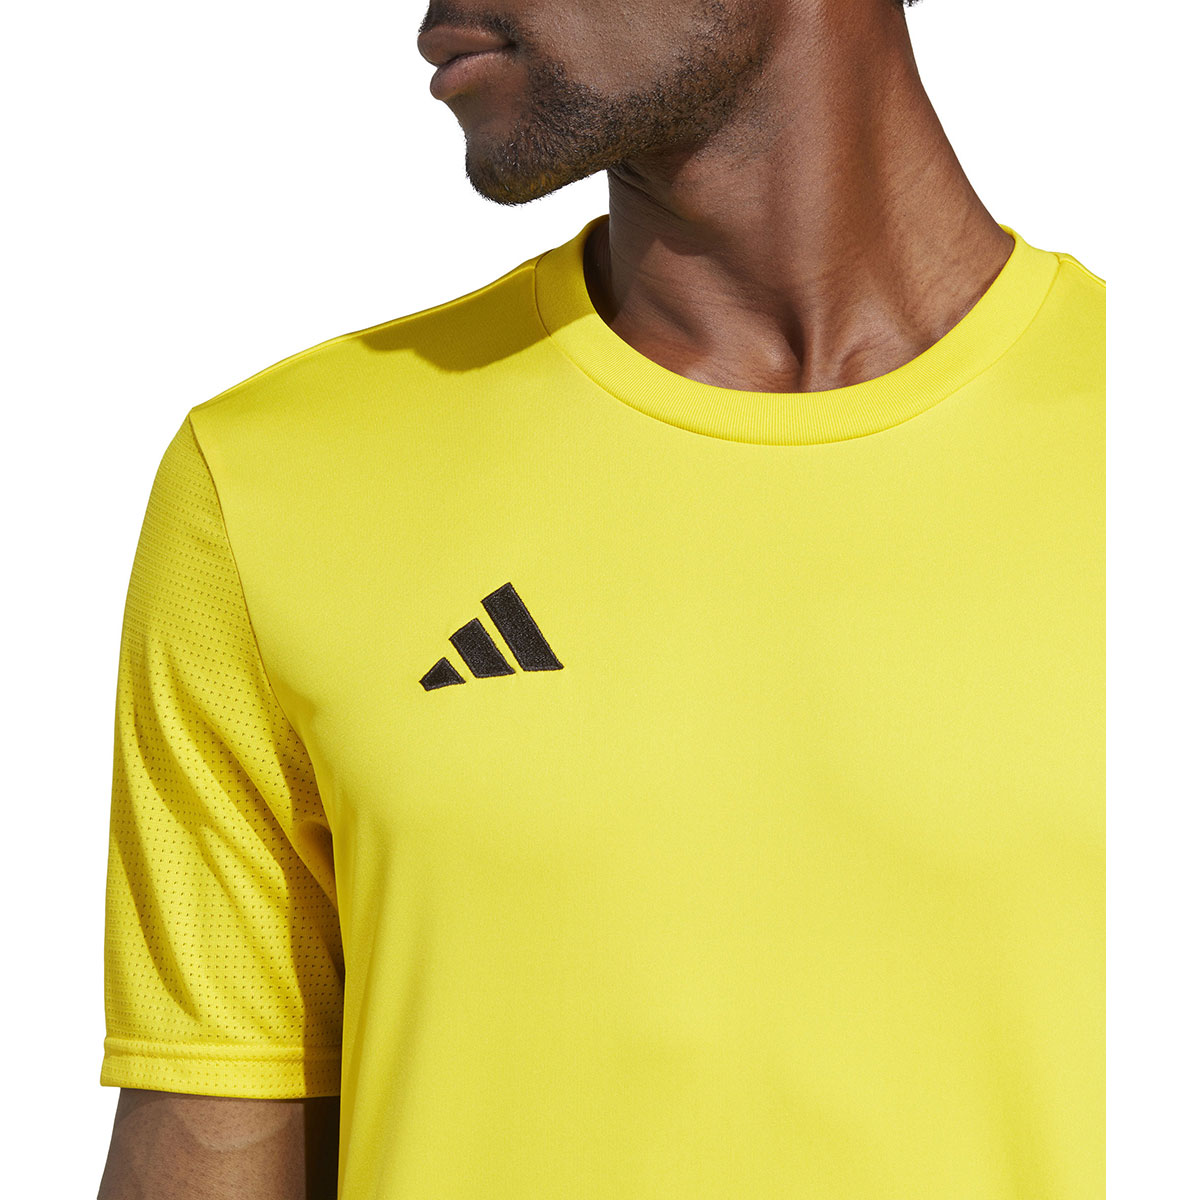 Adidas Herren Trikot Tabela 23 gelb-schwarz